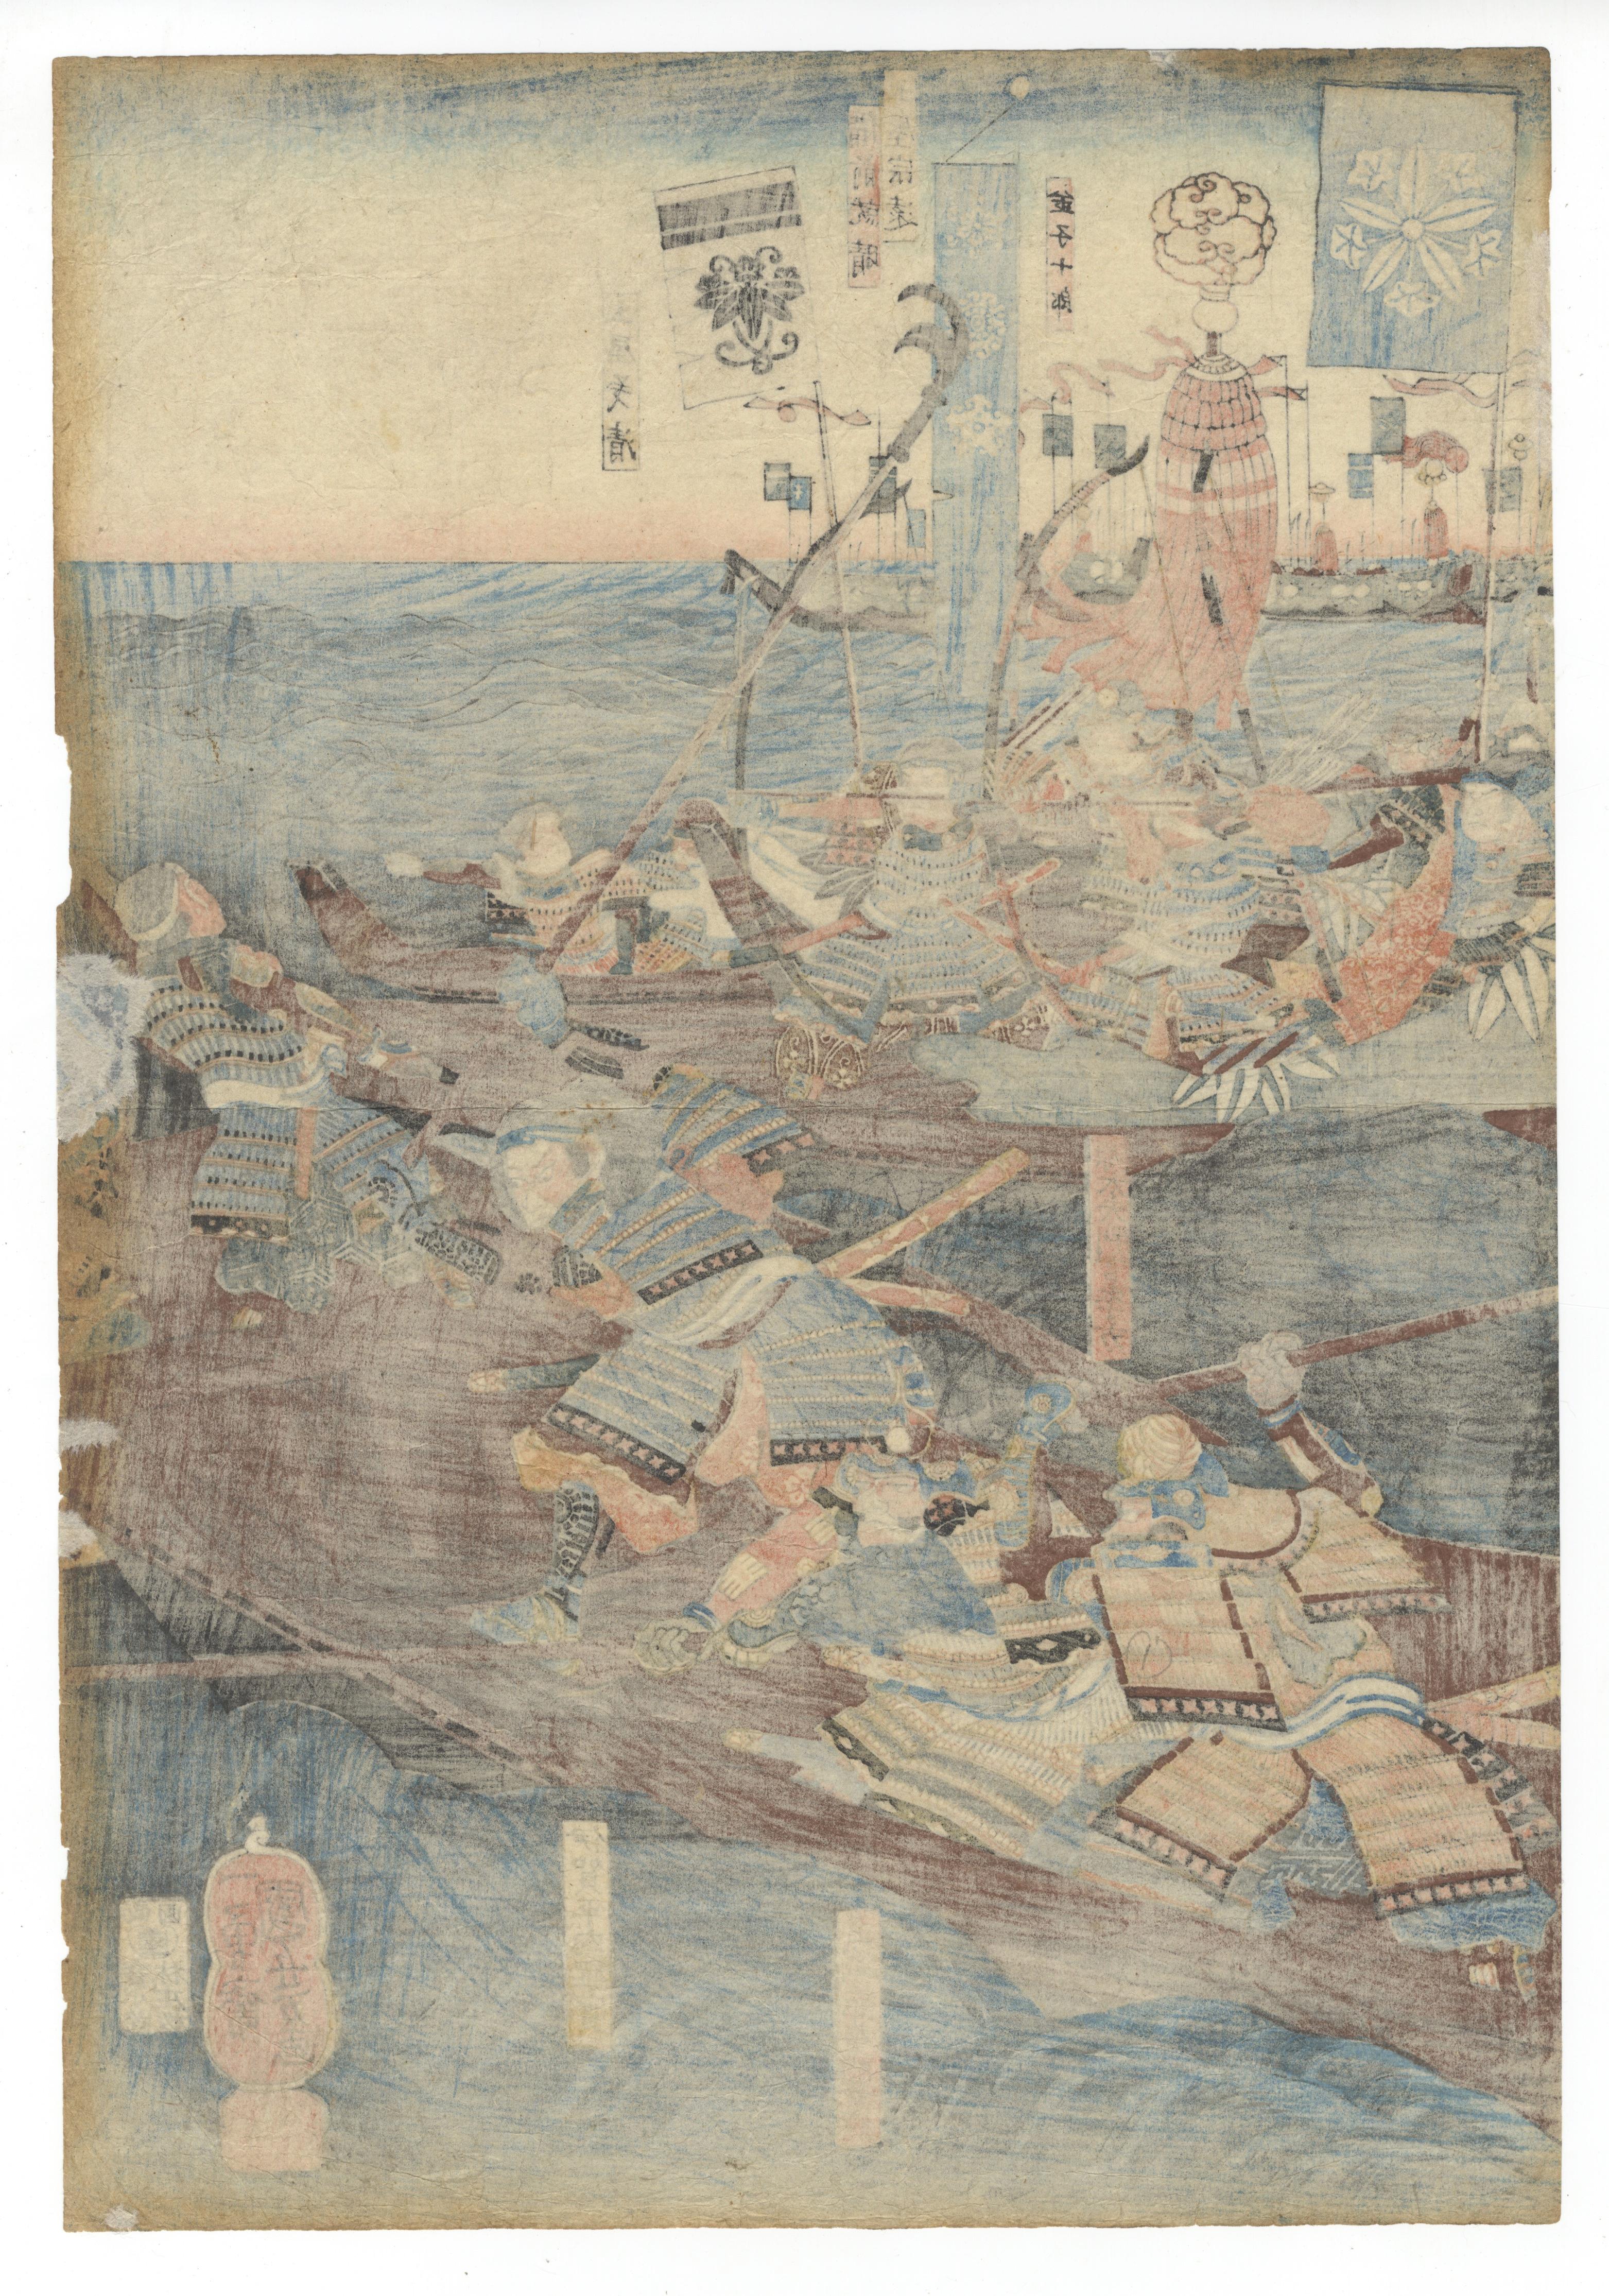 Artist: Kuniyoshi Utagawa (1798-1861)
Title: Minamoto no Yoshitsune Retrieves Bow
Publisher: Hayashiya Shogoro
Date: 1847
Dimensions: (L) 25.7 x 35.8 (C) 25 x 35.6 (R) 24.7 x 35.6 cm

The Battle of Yashima saw the Genpei War (1180-1885) approaching